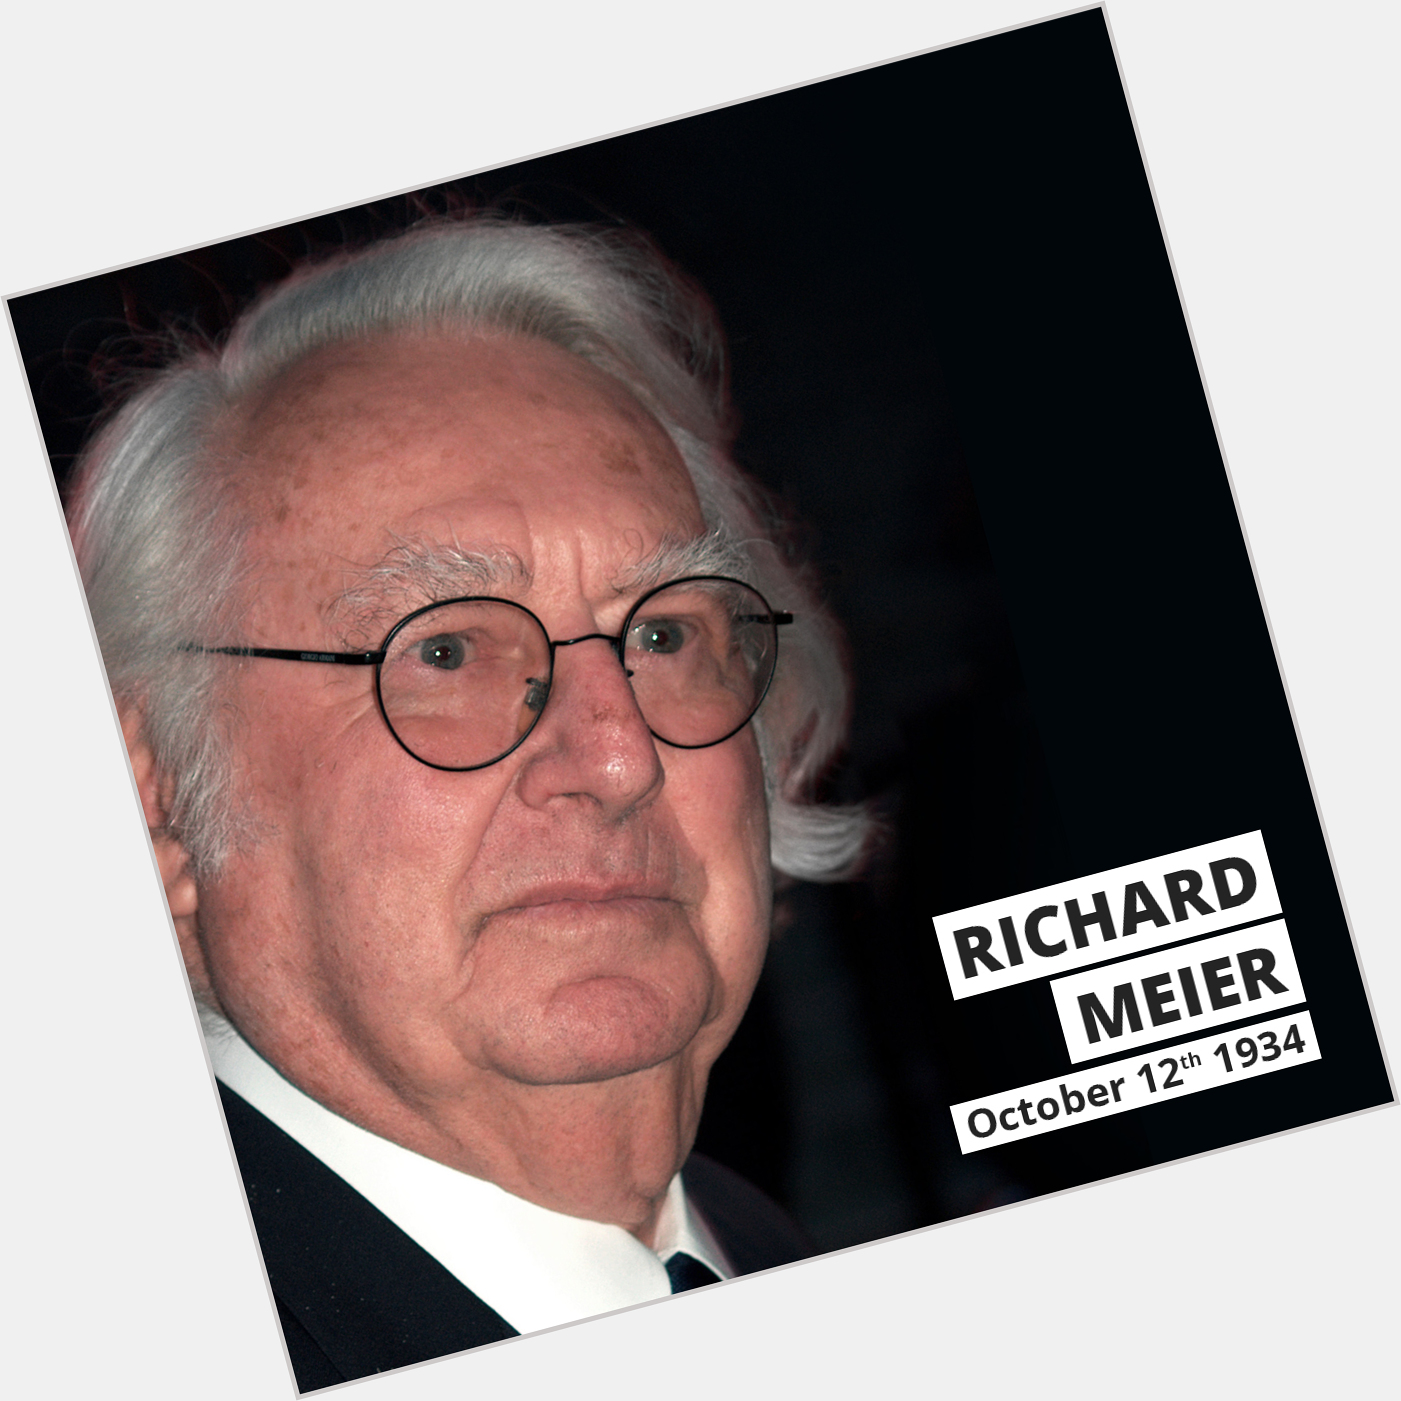 Join us in wishing Richard Meier a Happy 87th birthday!      